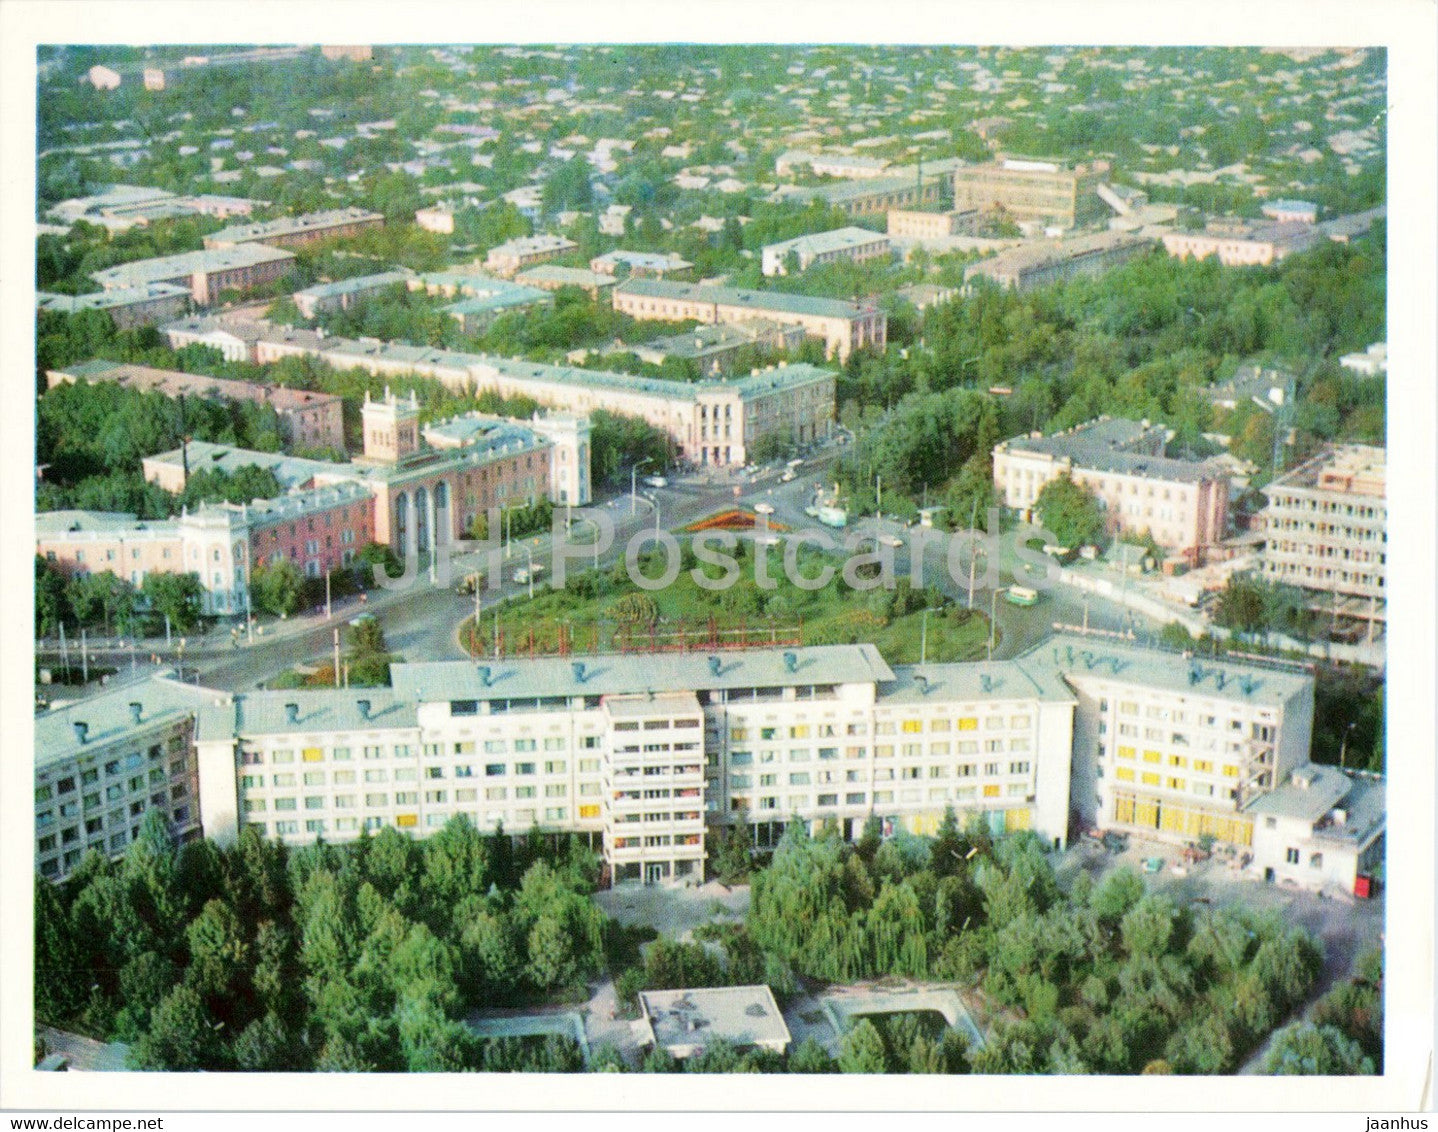 Dushanbe - panorama of the city - 1974 - Tajikistan USSR - unused - JH Postcards